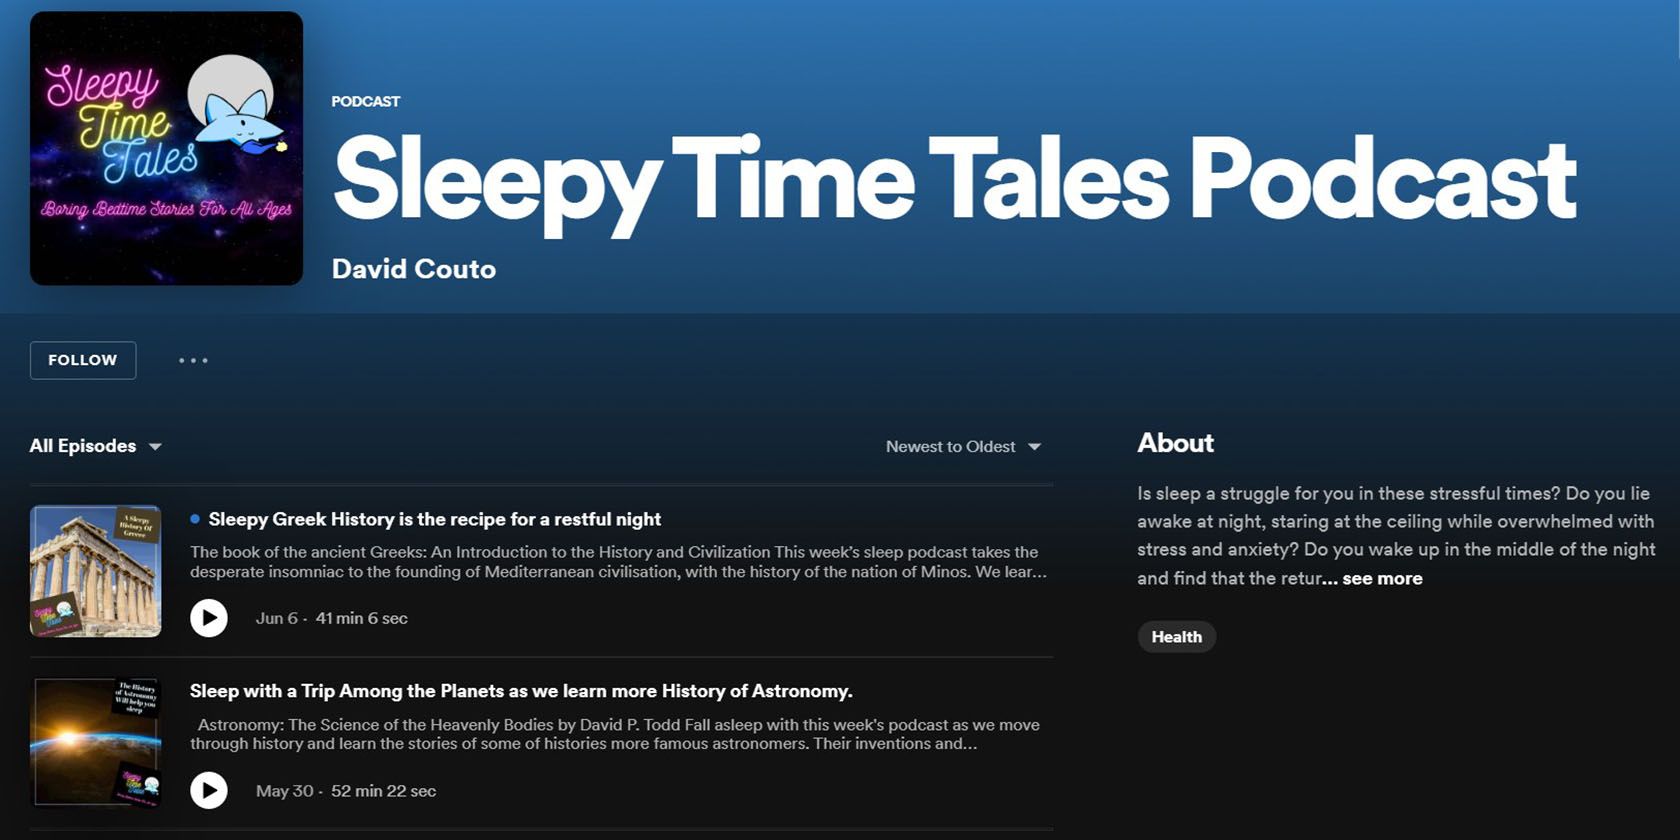 Sleepy Time Tales Podcast on Spotify